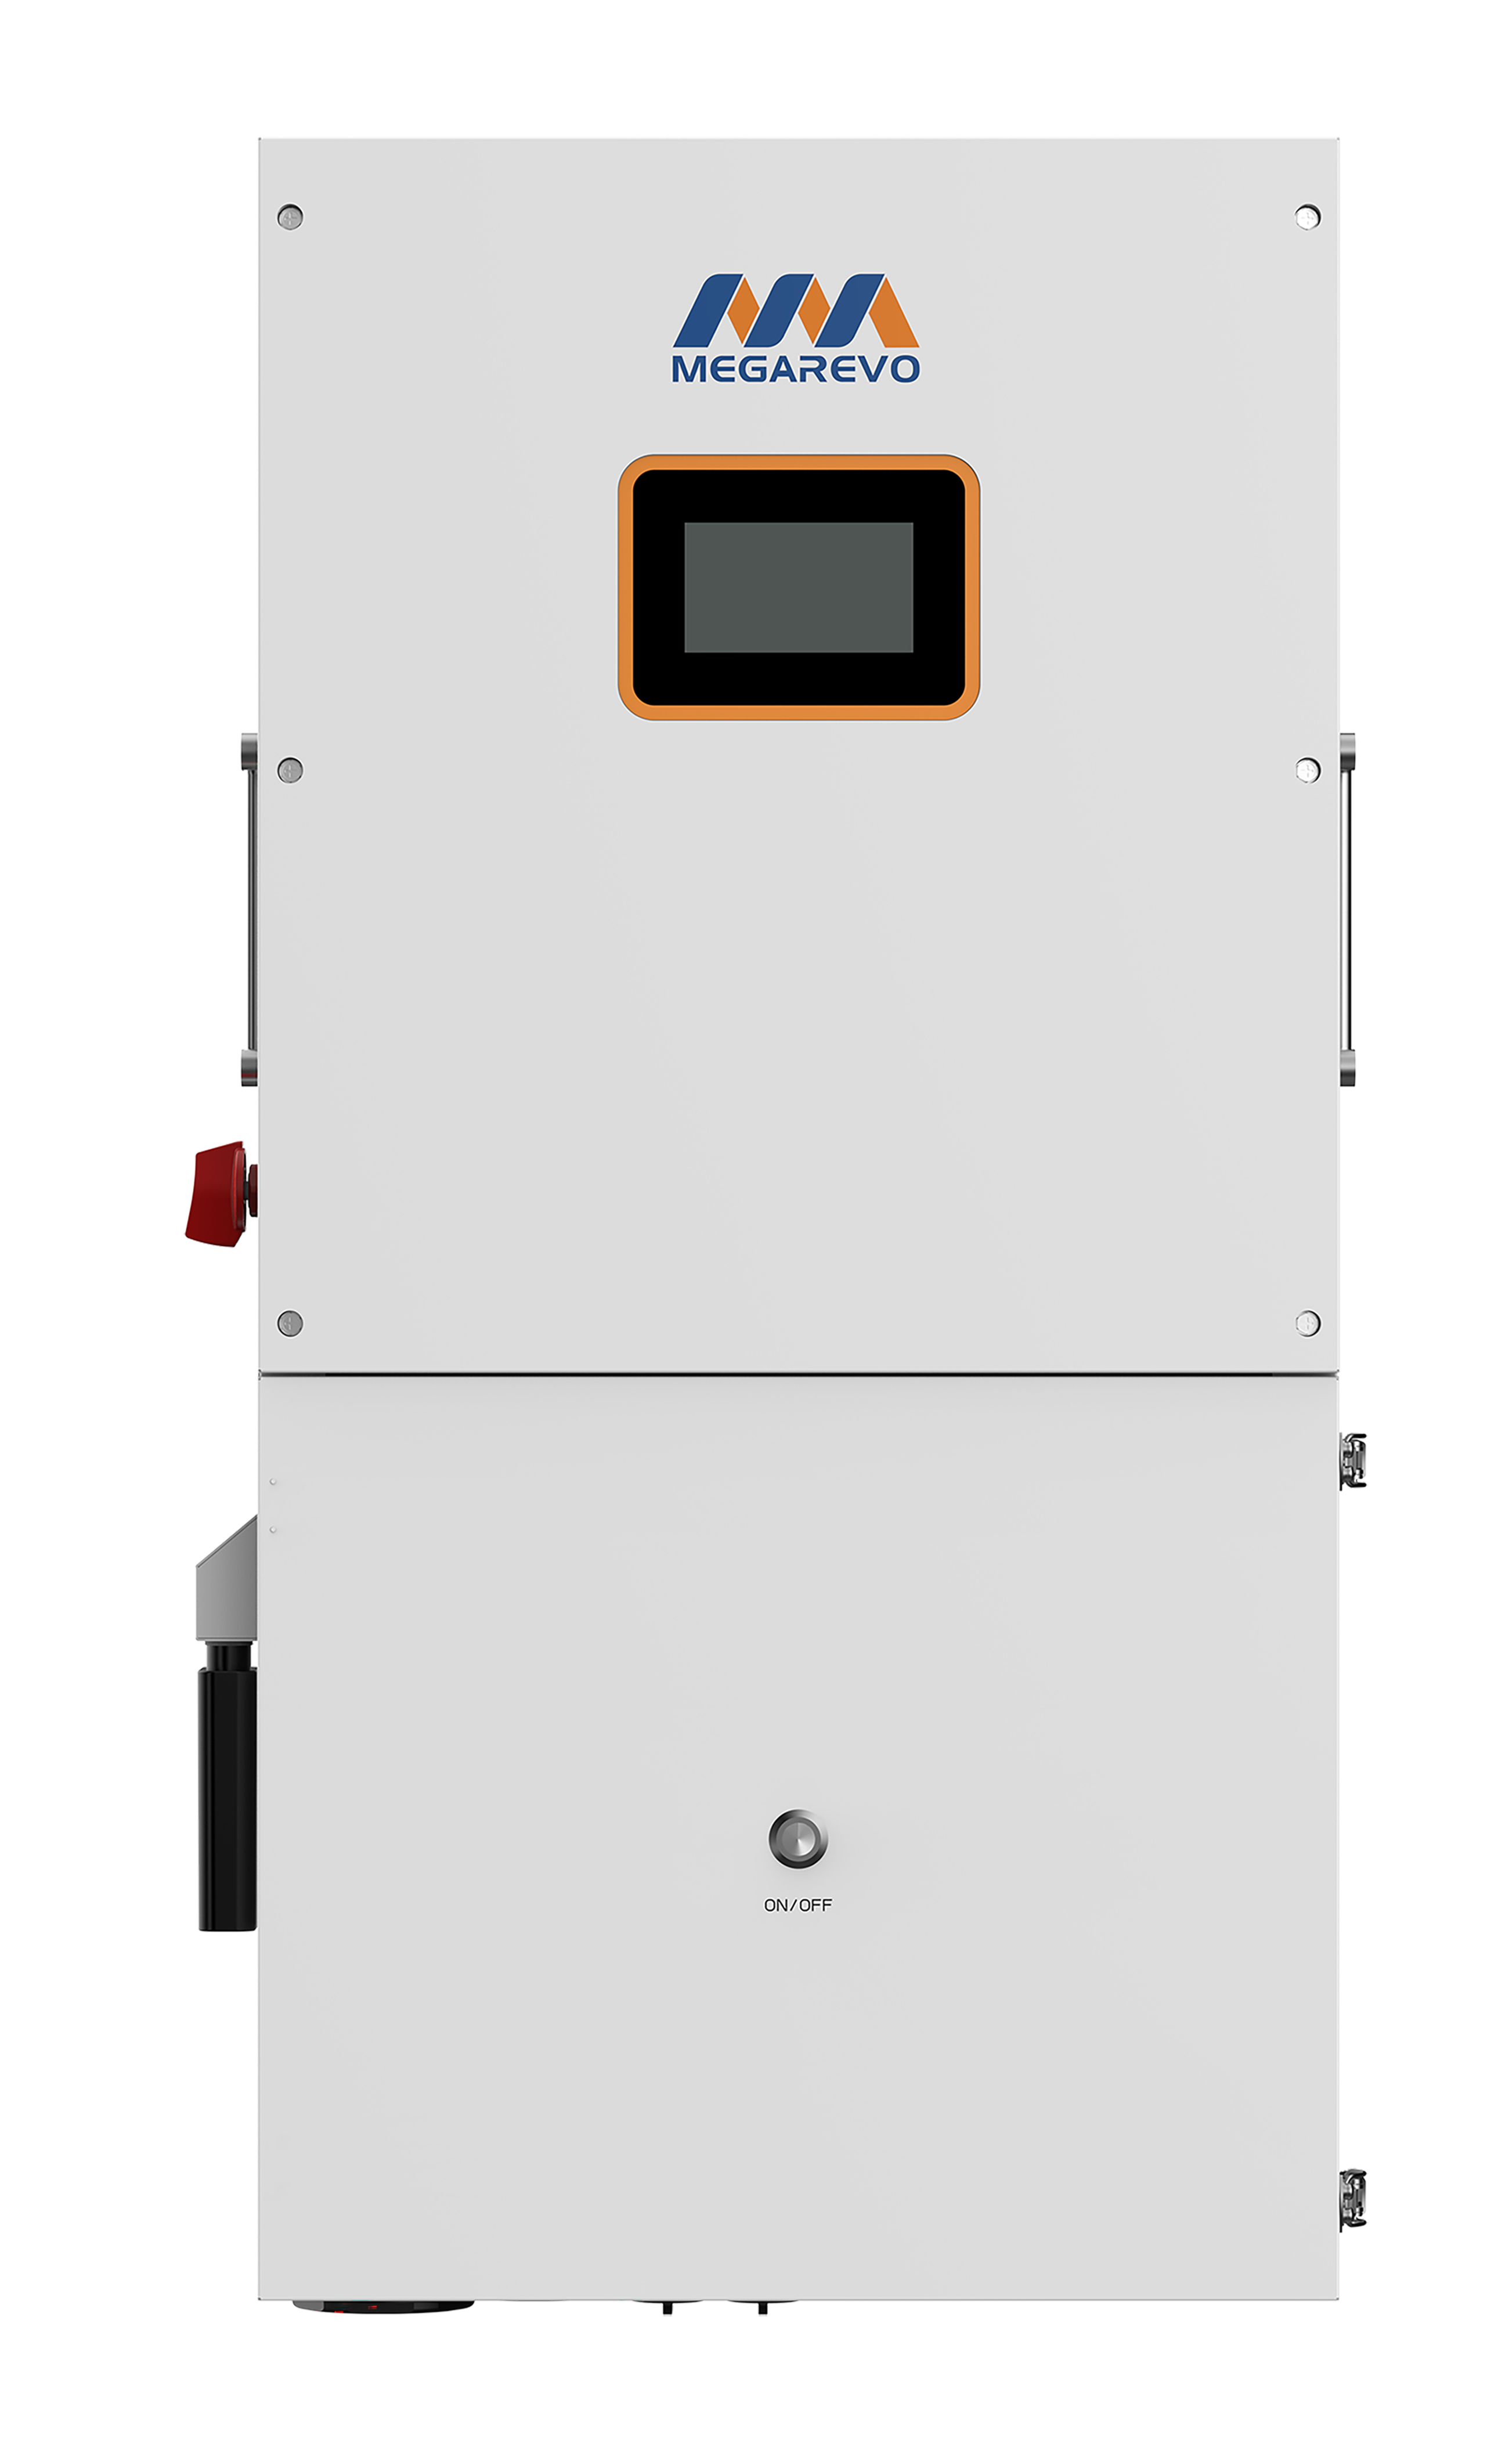 American ESS split- phase inverter（battery voltage:48V）